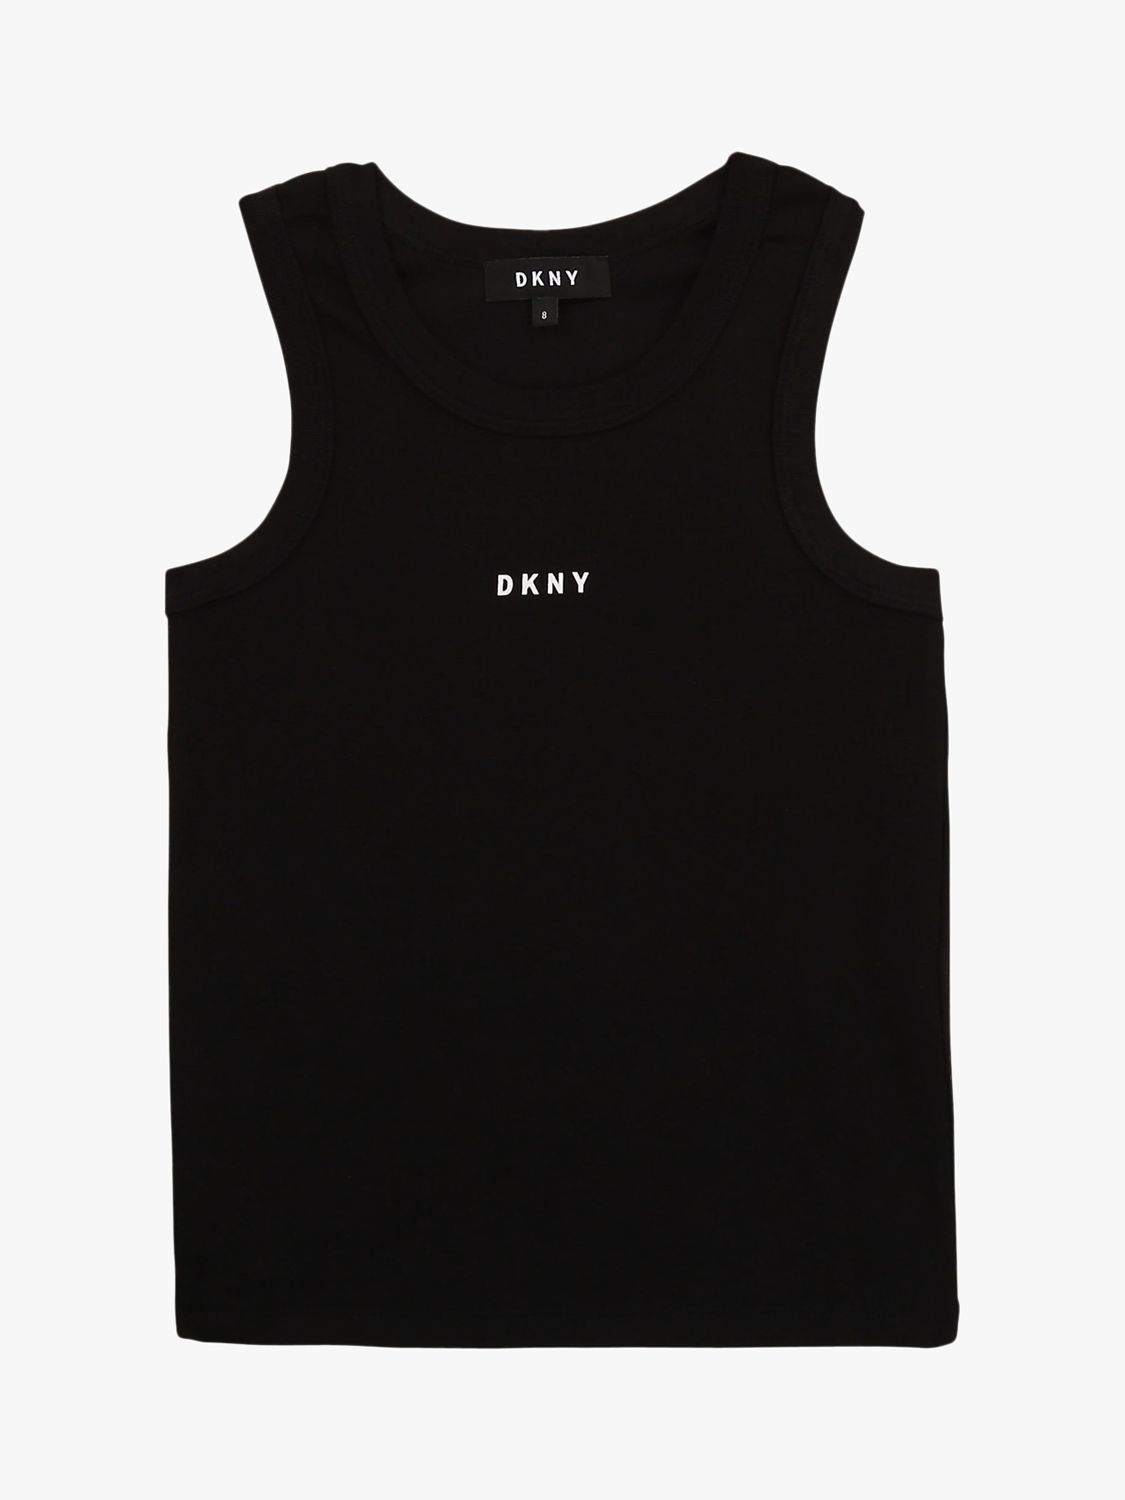 DKNY Kids' Vest & Jersey Top, Poppy, 4 years